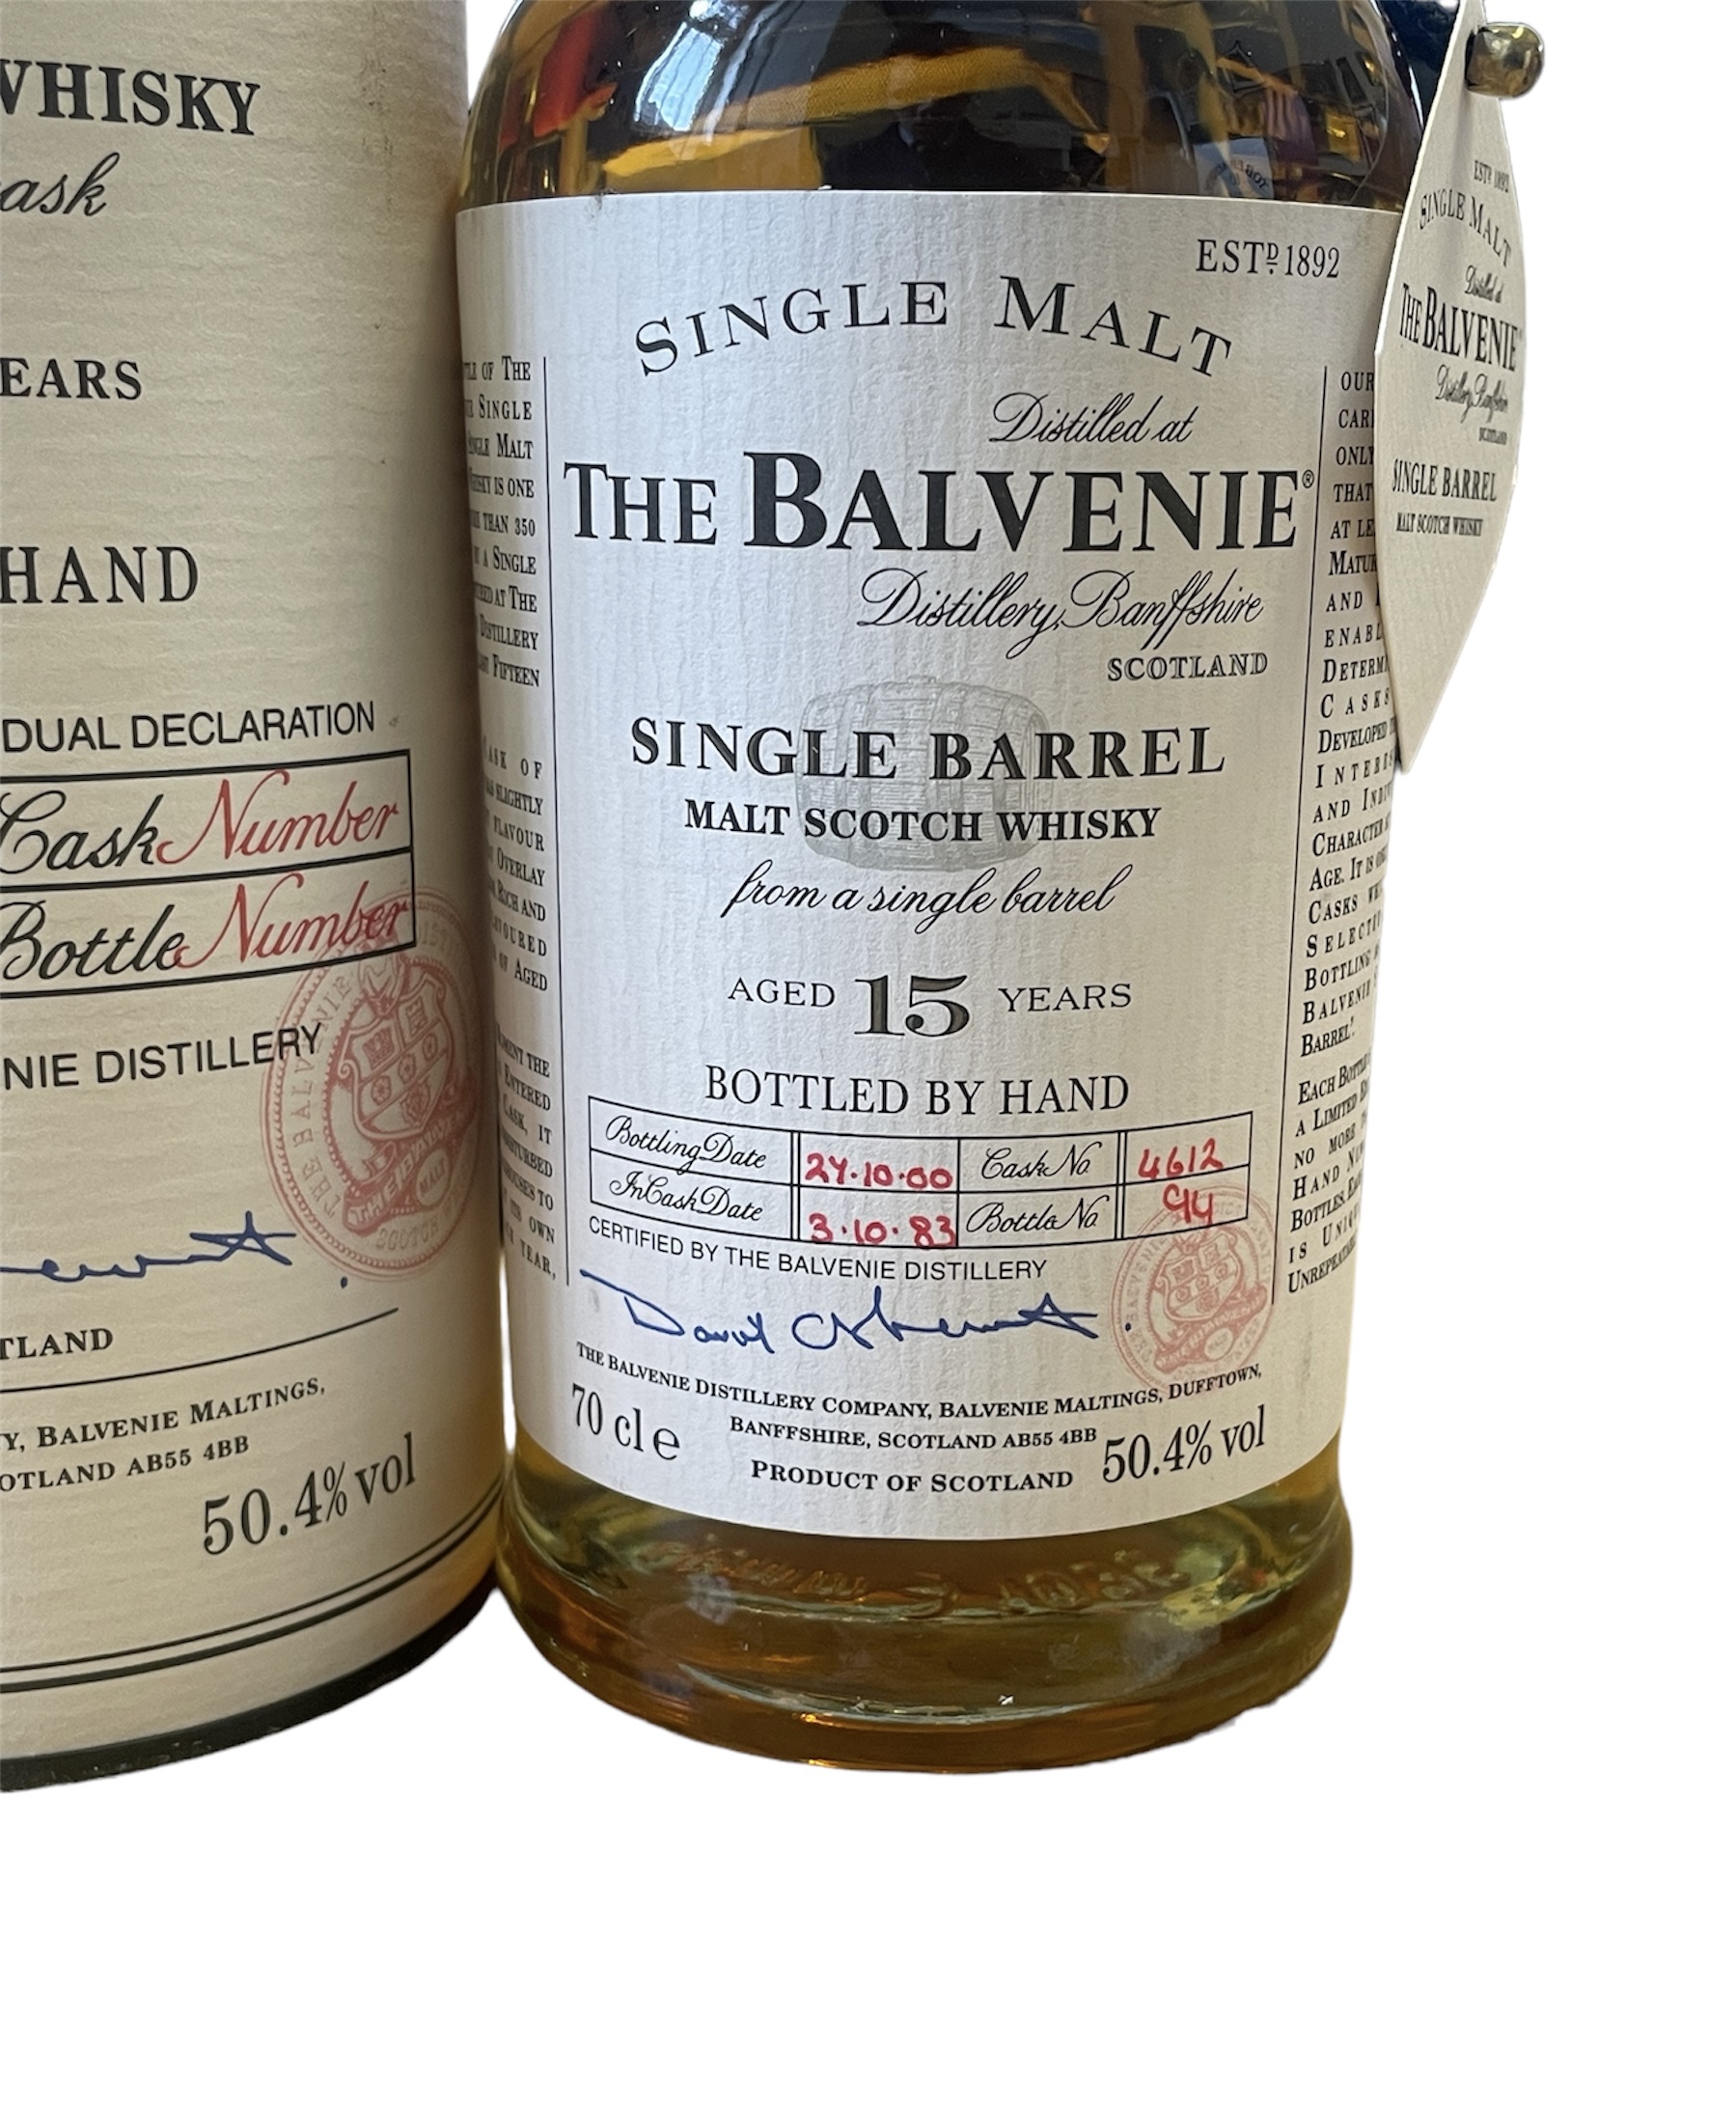 The balvenie single barrel malt scotch wisky aged 15 years 70cl 50.4%vol - Image 2 of 2